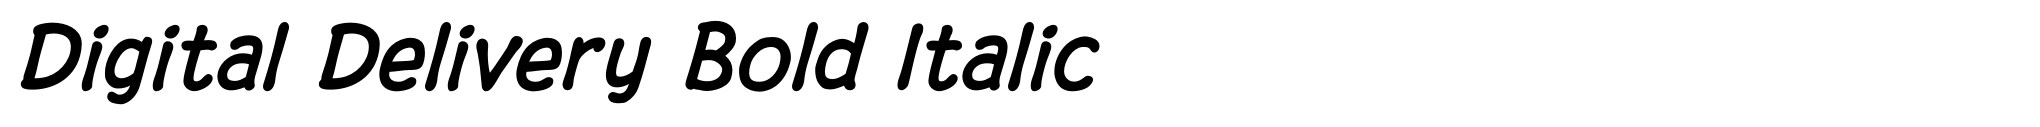 Digital Delivery Bold Italic image